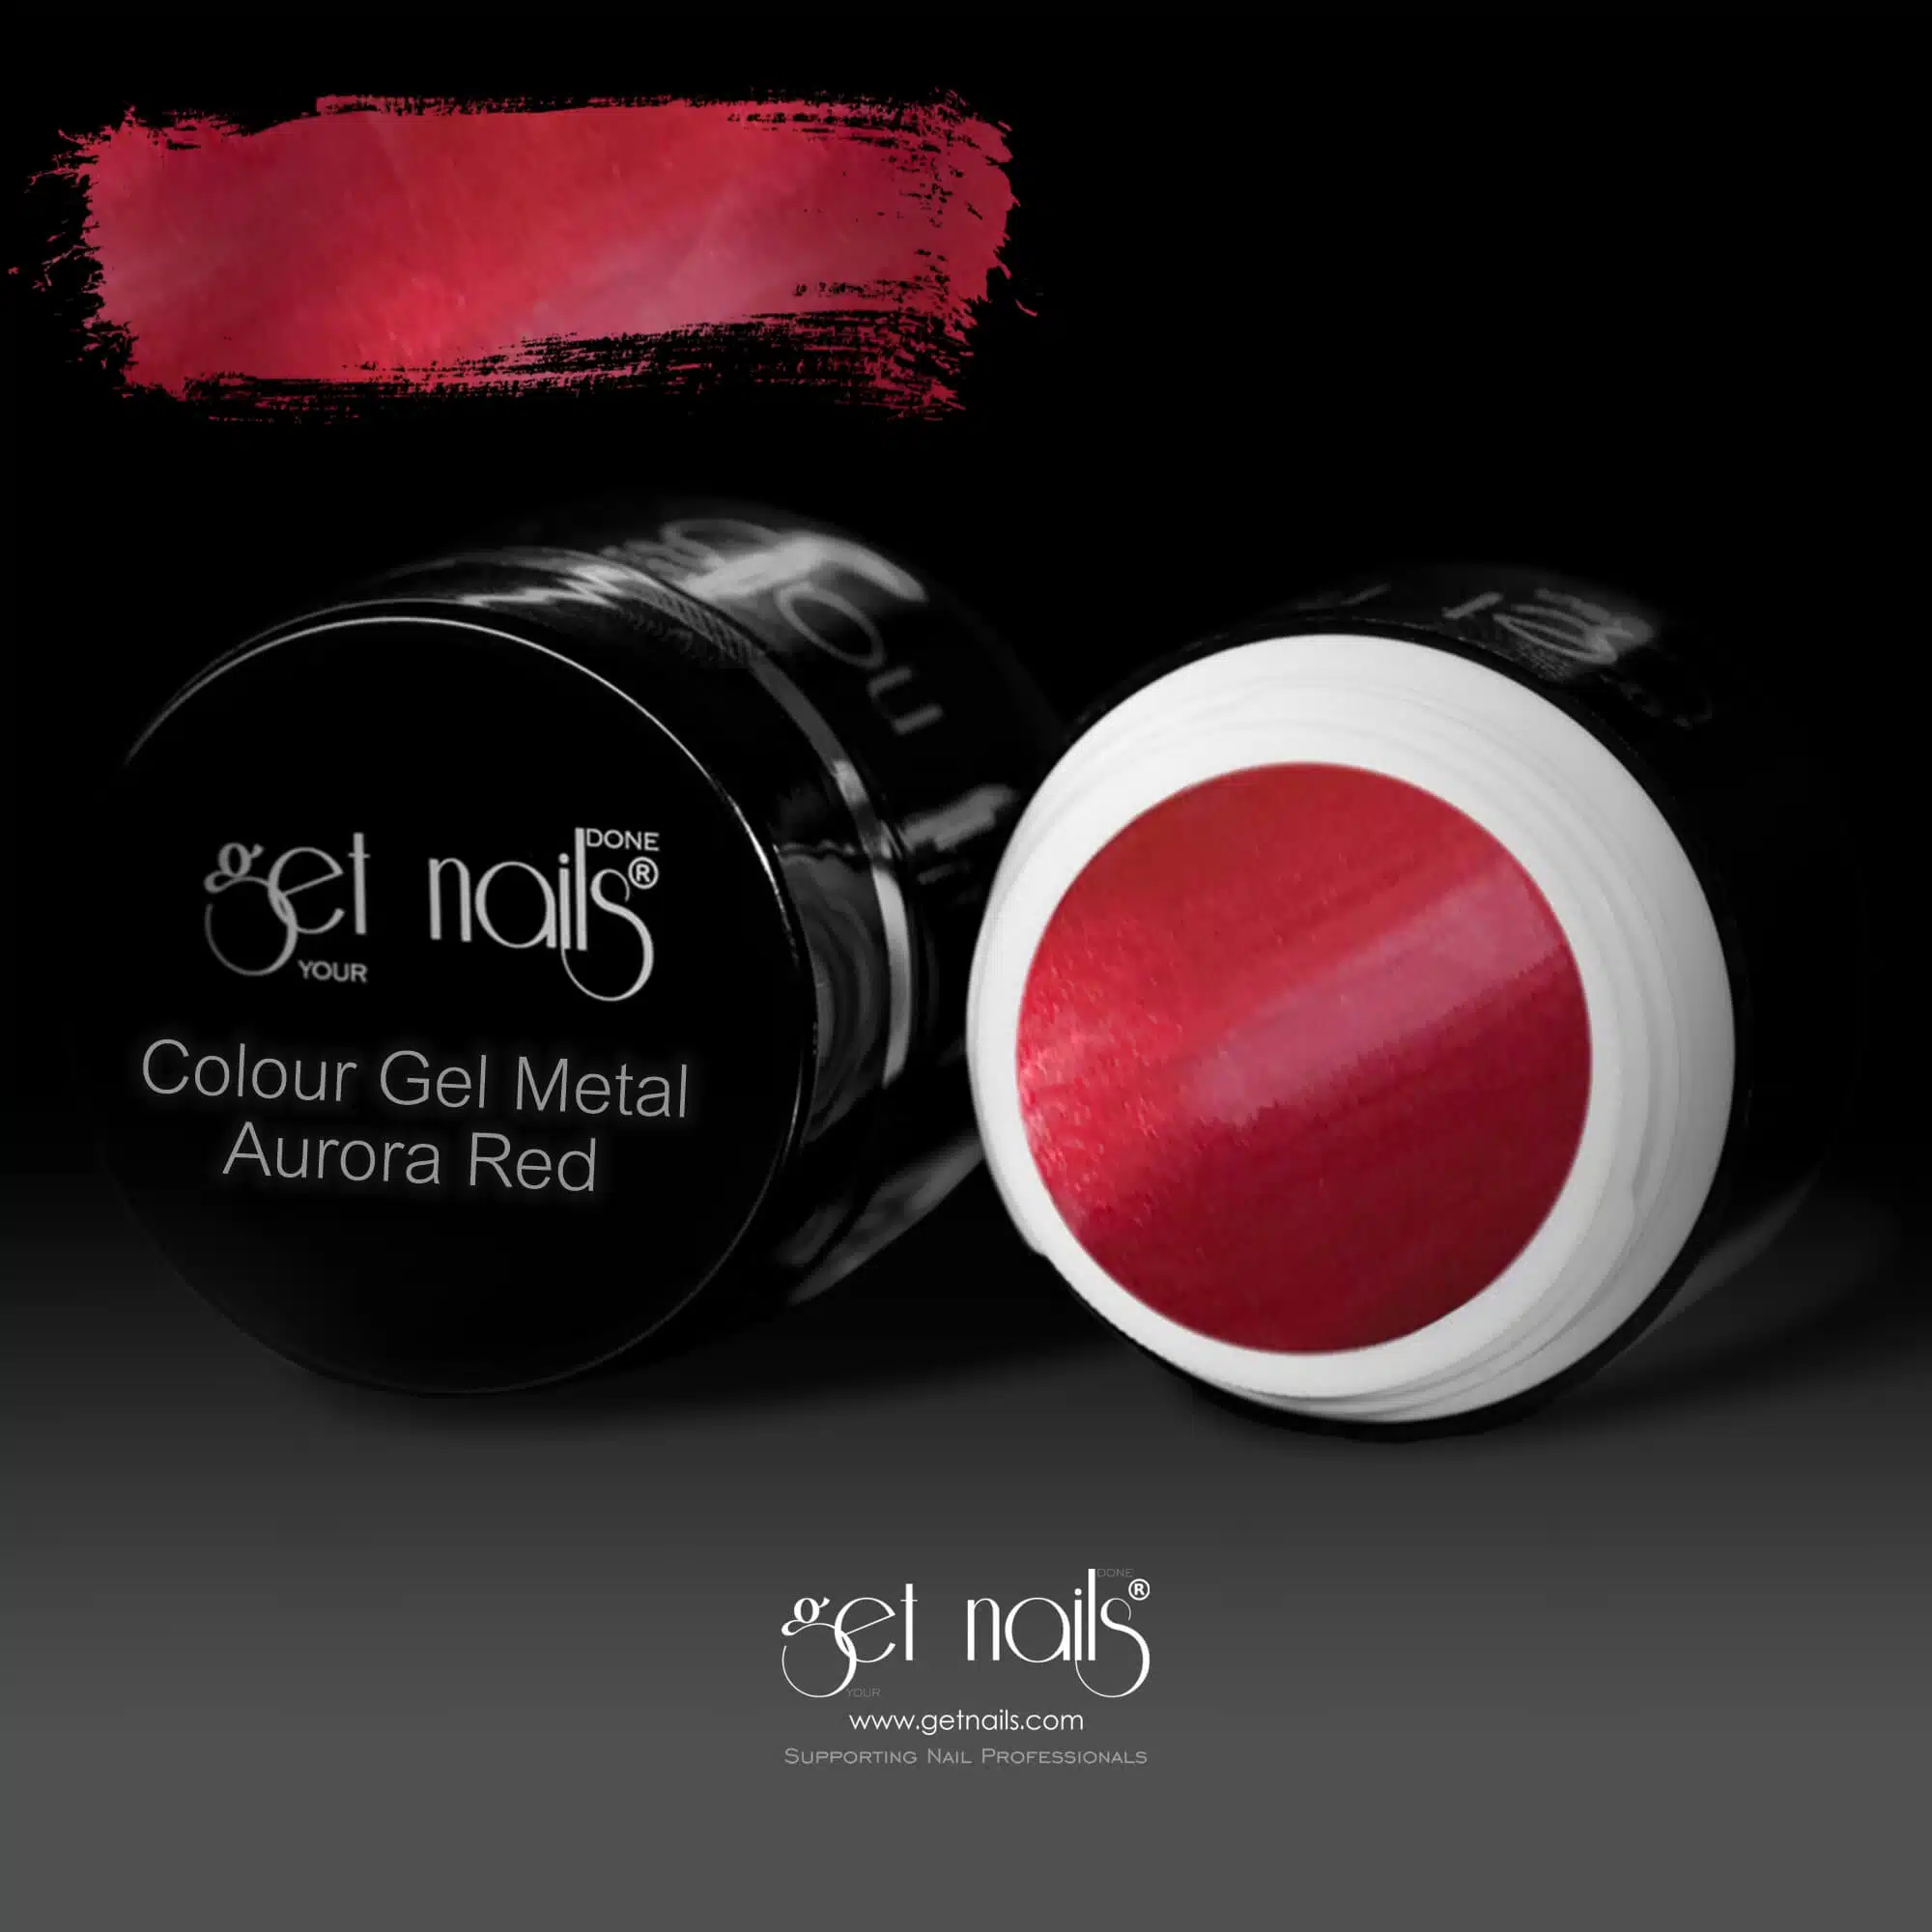 Get Nails Austria - Gel colorato Metal Aurora Red 5g